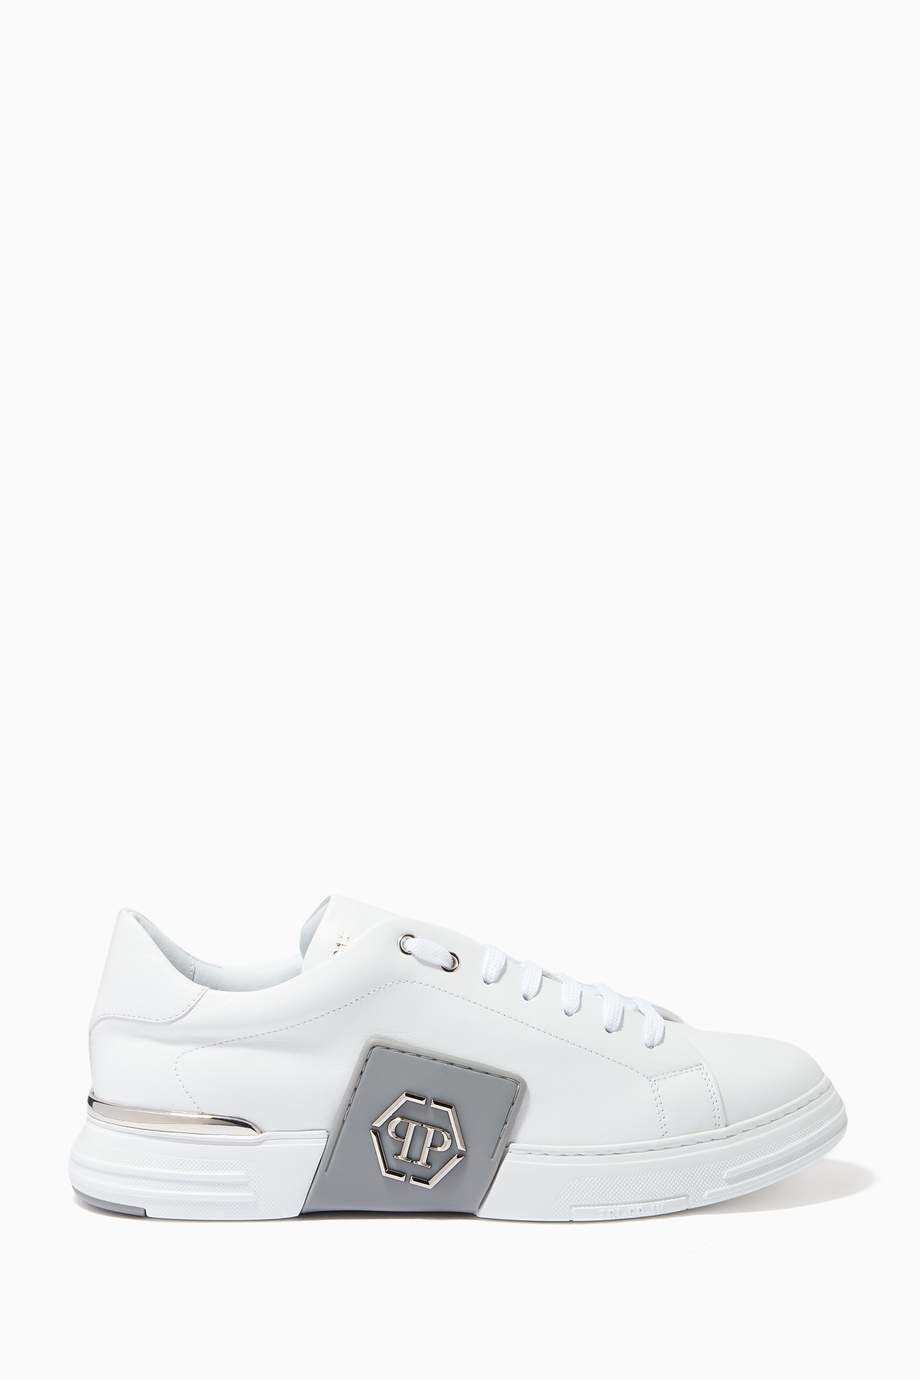 Shop Philipp Plein White Phantom Kicks Sneakers in Leather for Men ...